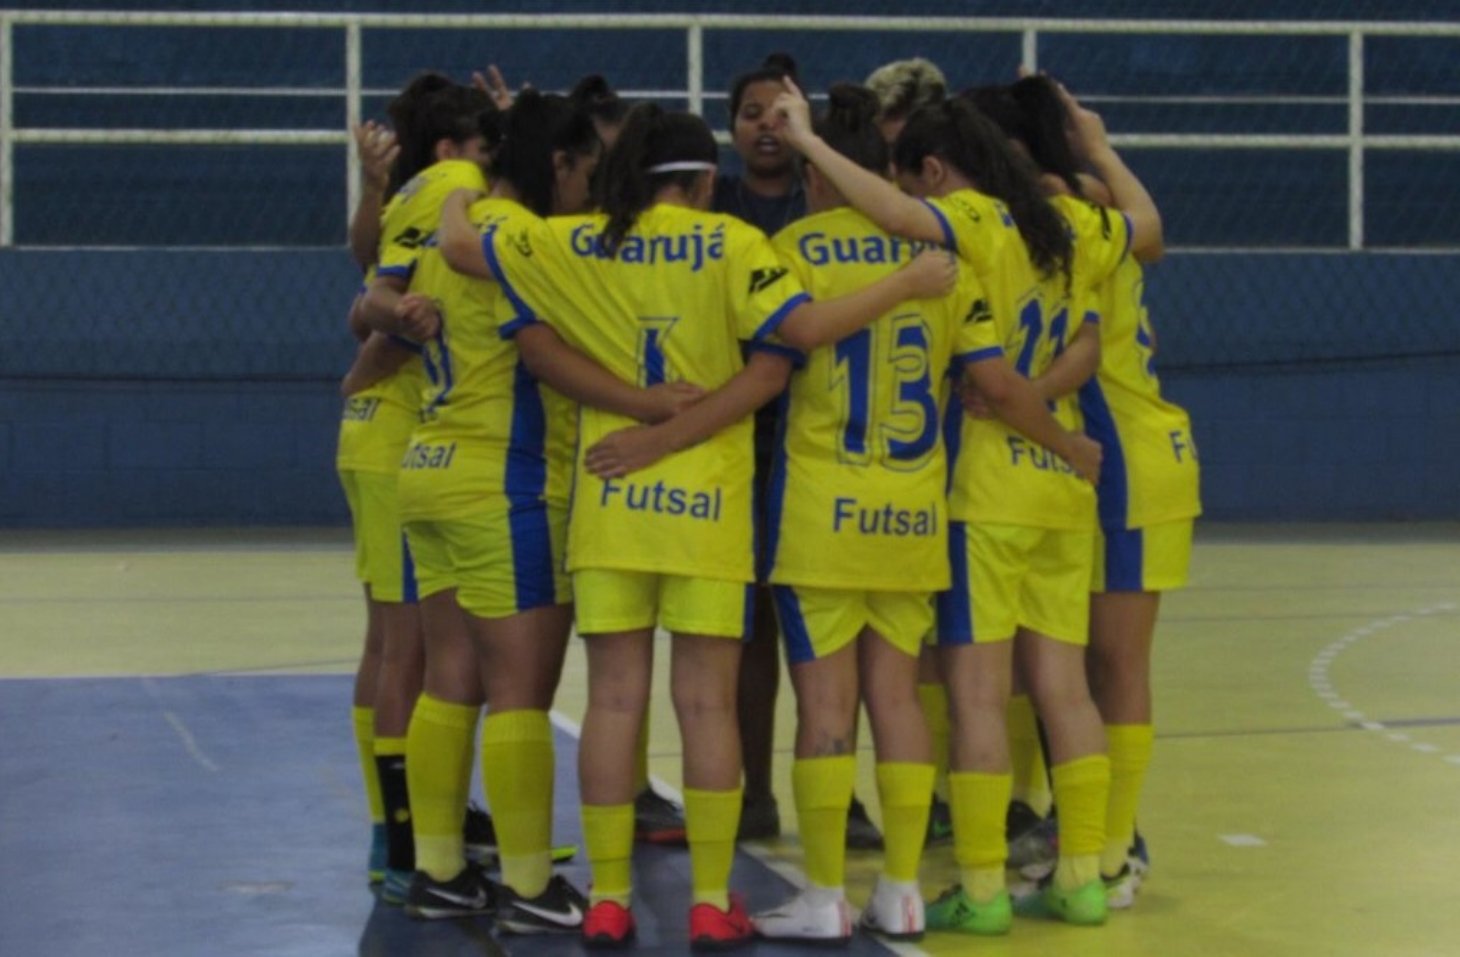 Futsal feminino de Guarujá abre seletiva | Jornal da Orla